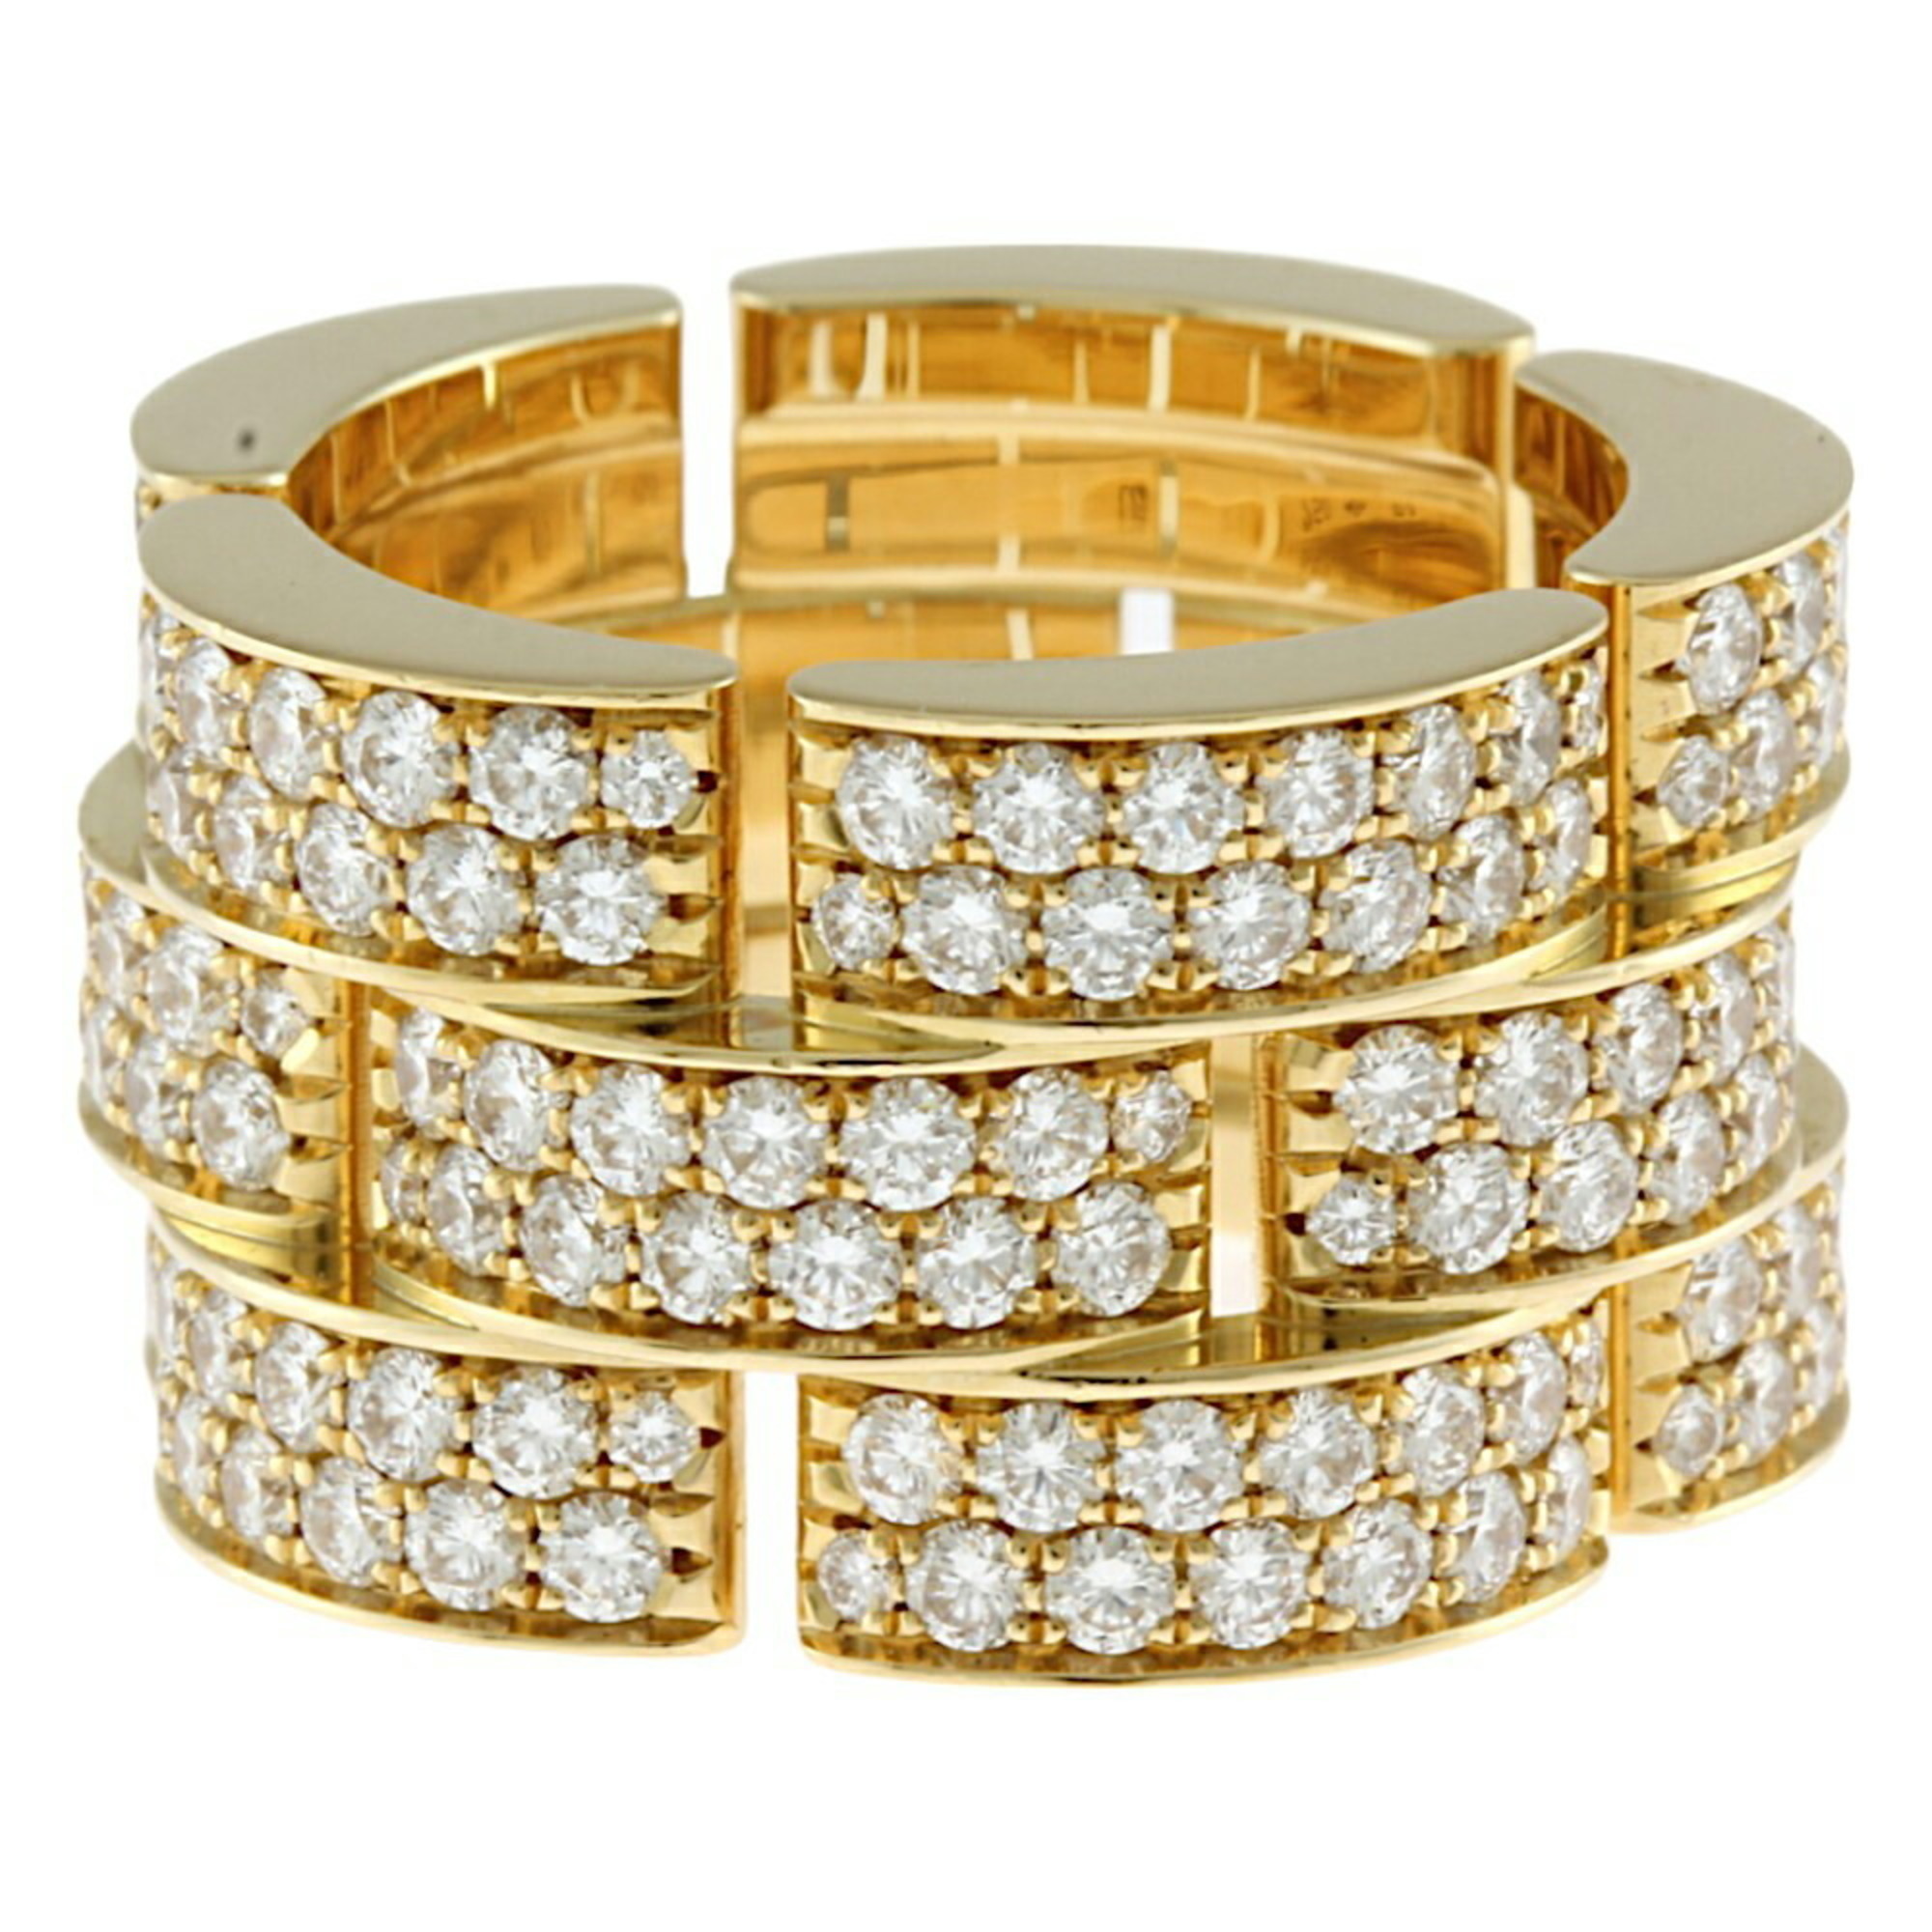 Cartier Maillon Panthere Diamond Ring, Size 13, 18K, Diamond, Women's, CARTIER